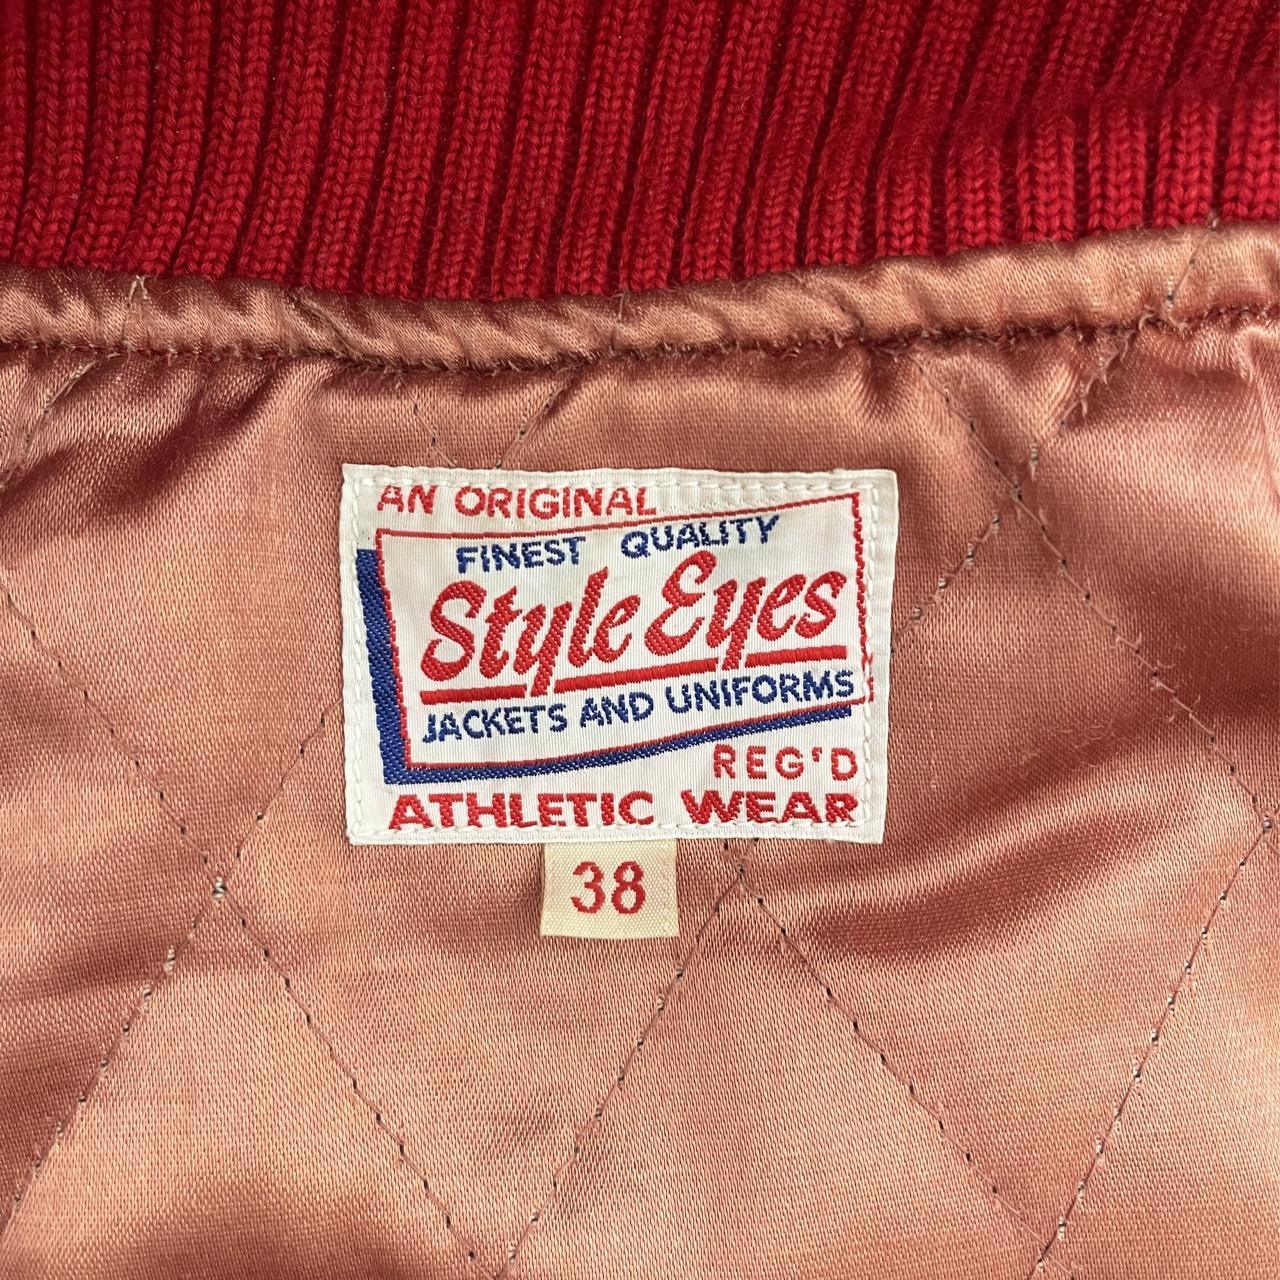 Style Eyes Varsity Jacket - Known Source